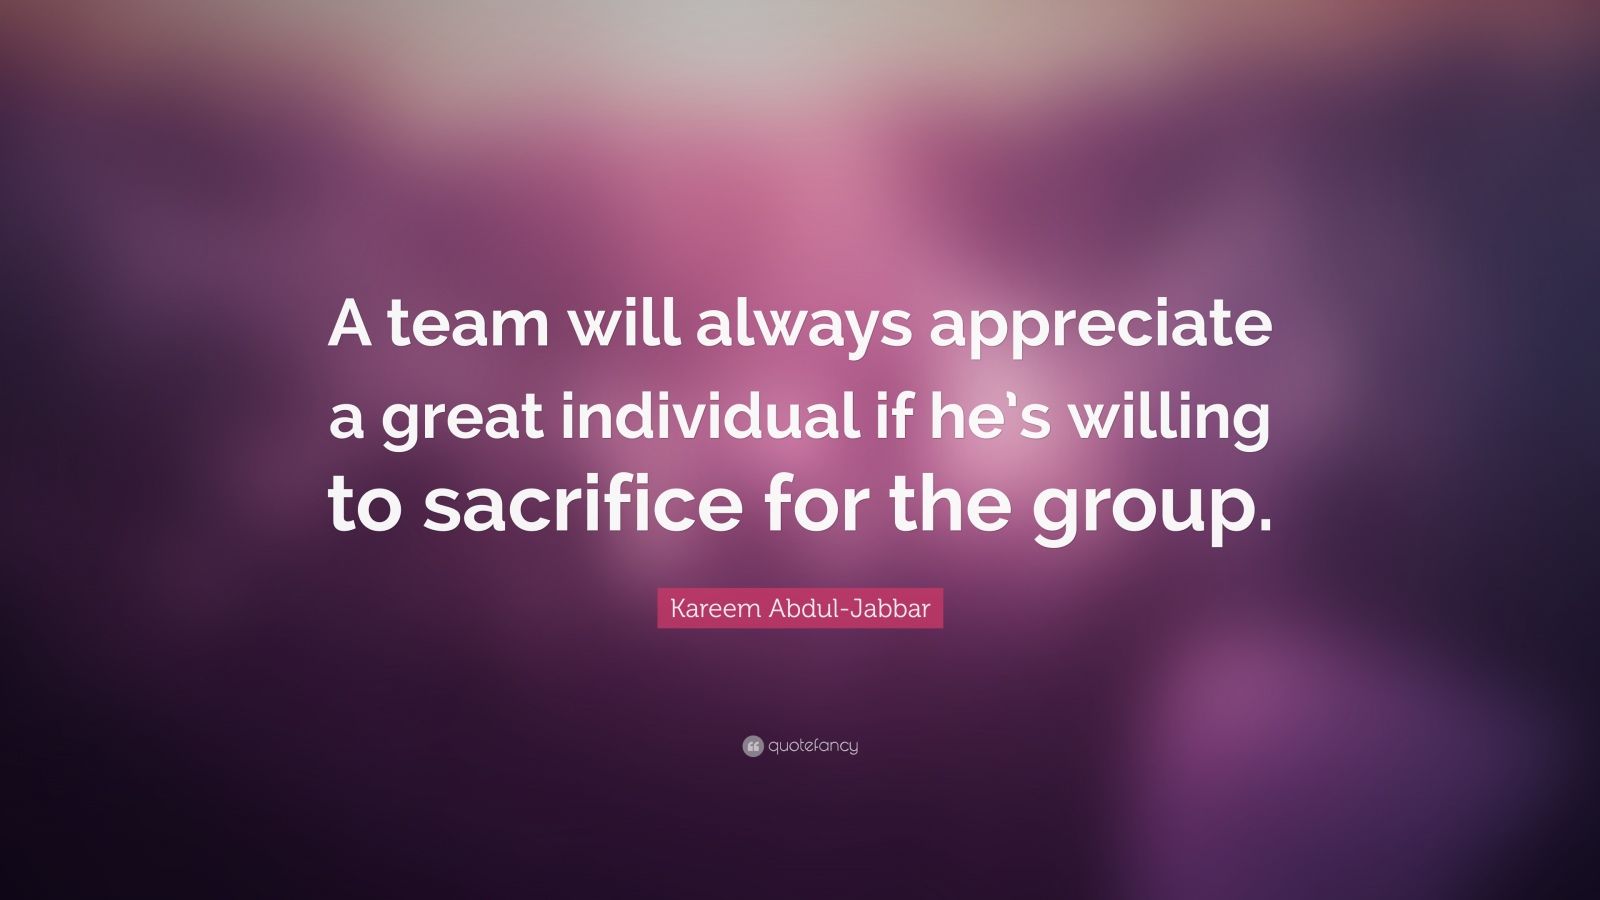 Kareem Abdul-Jabbar Quote: “A team will always appreciate a great ...